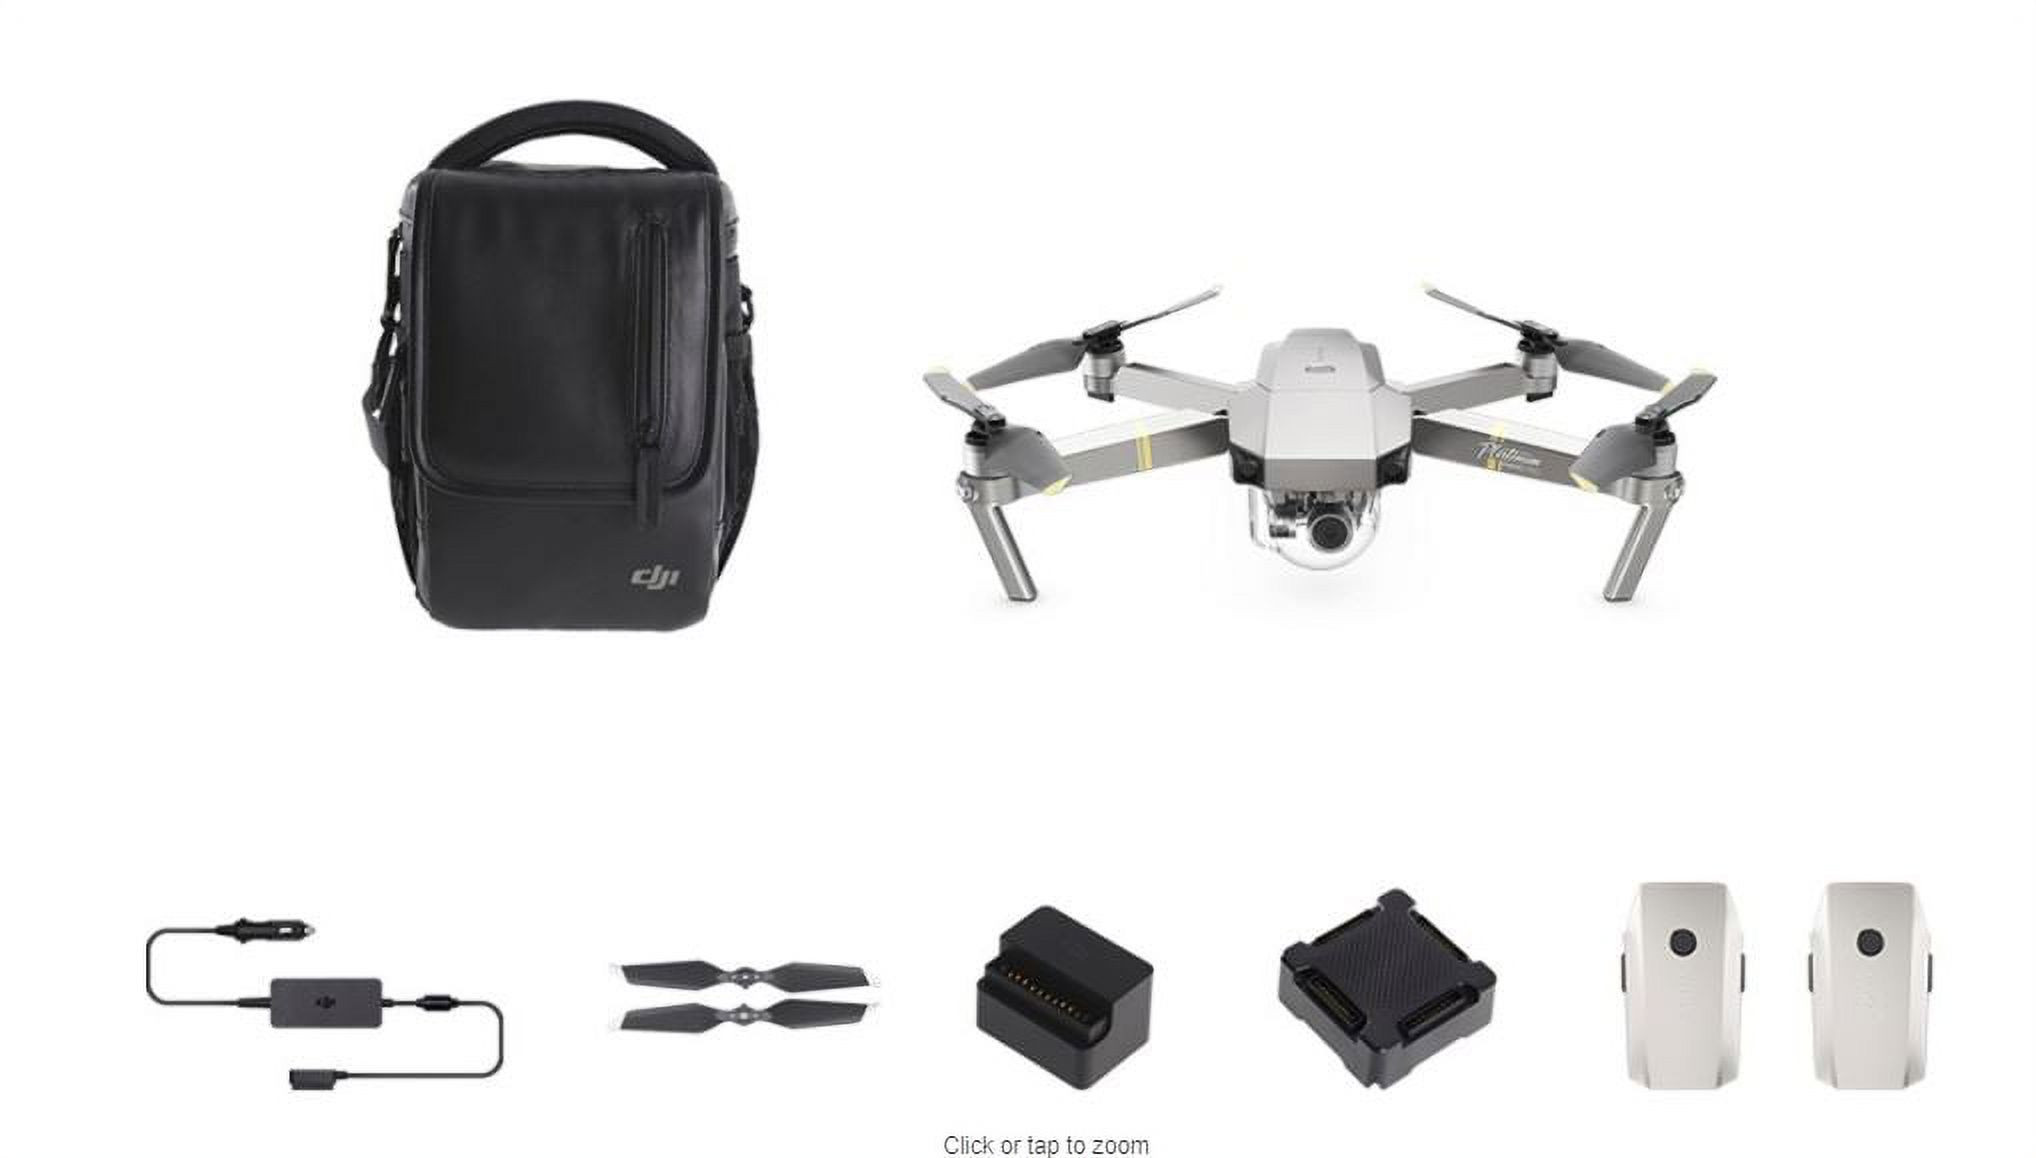 Dji Mavic Pro Platinum Quadcopter Drone - Fly More Combo - image 1 of 6